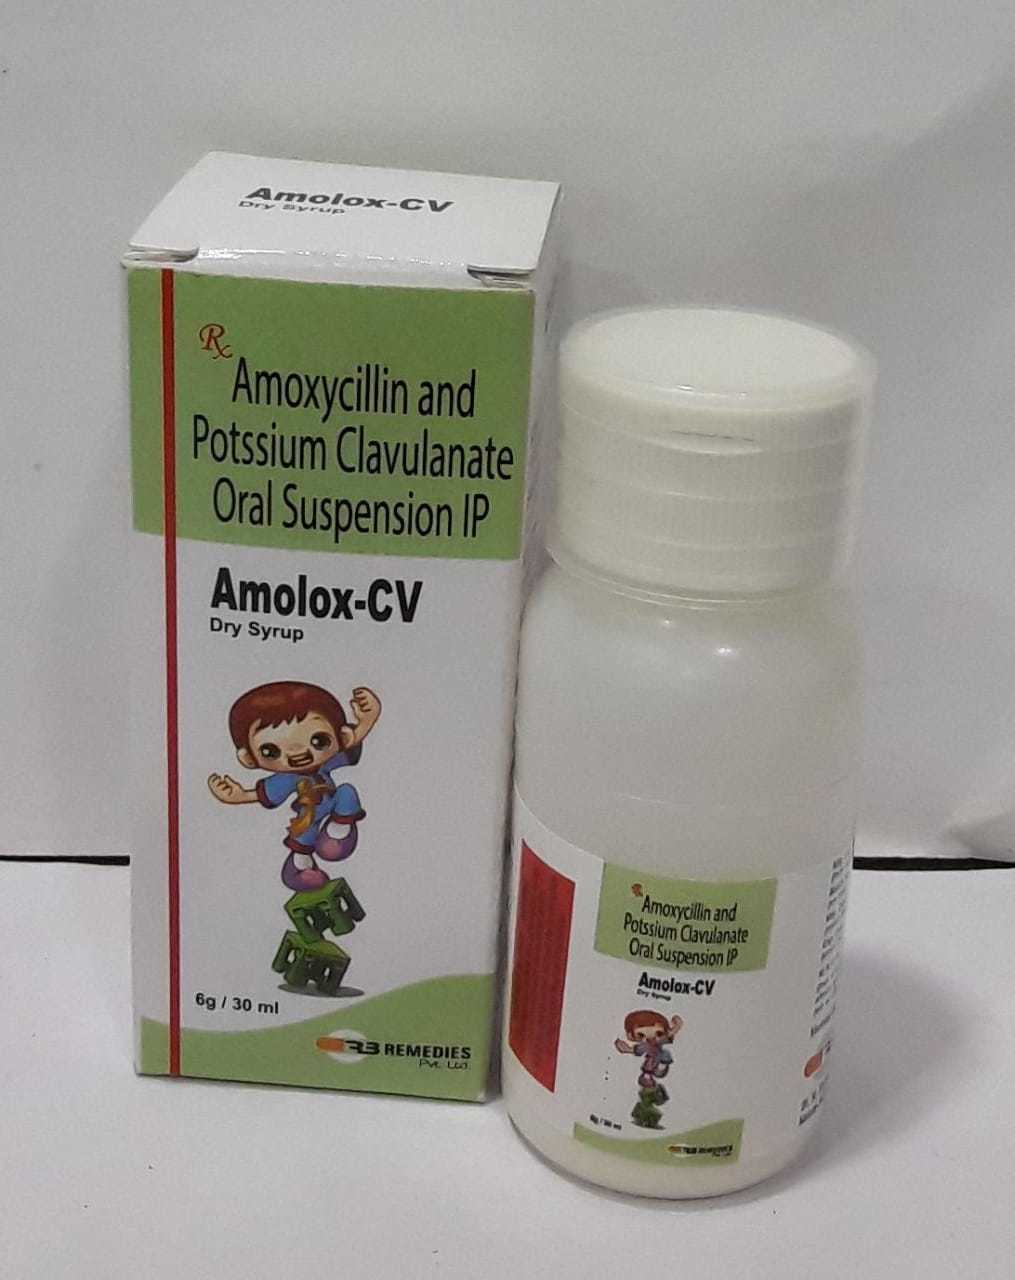 Amoxycillin 200 mg Potassium clavulanate 28.5 mg